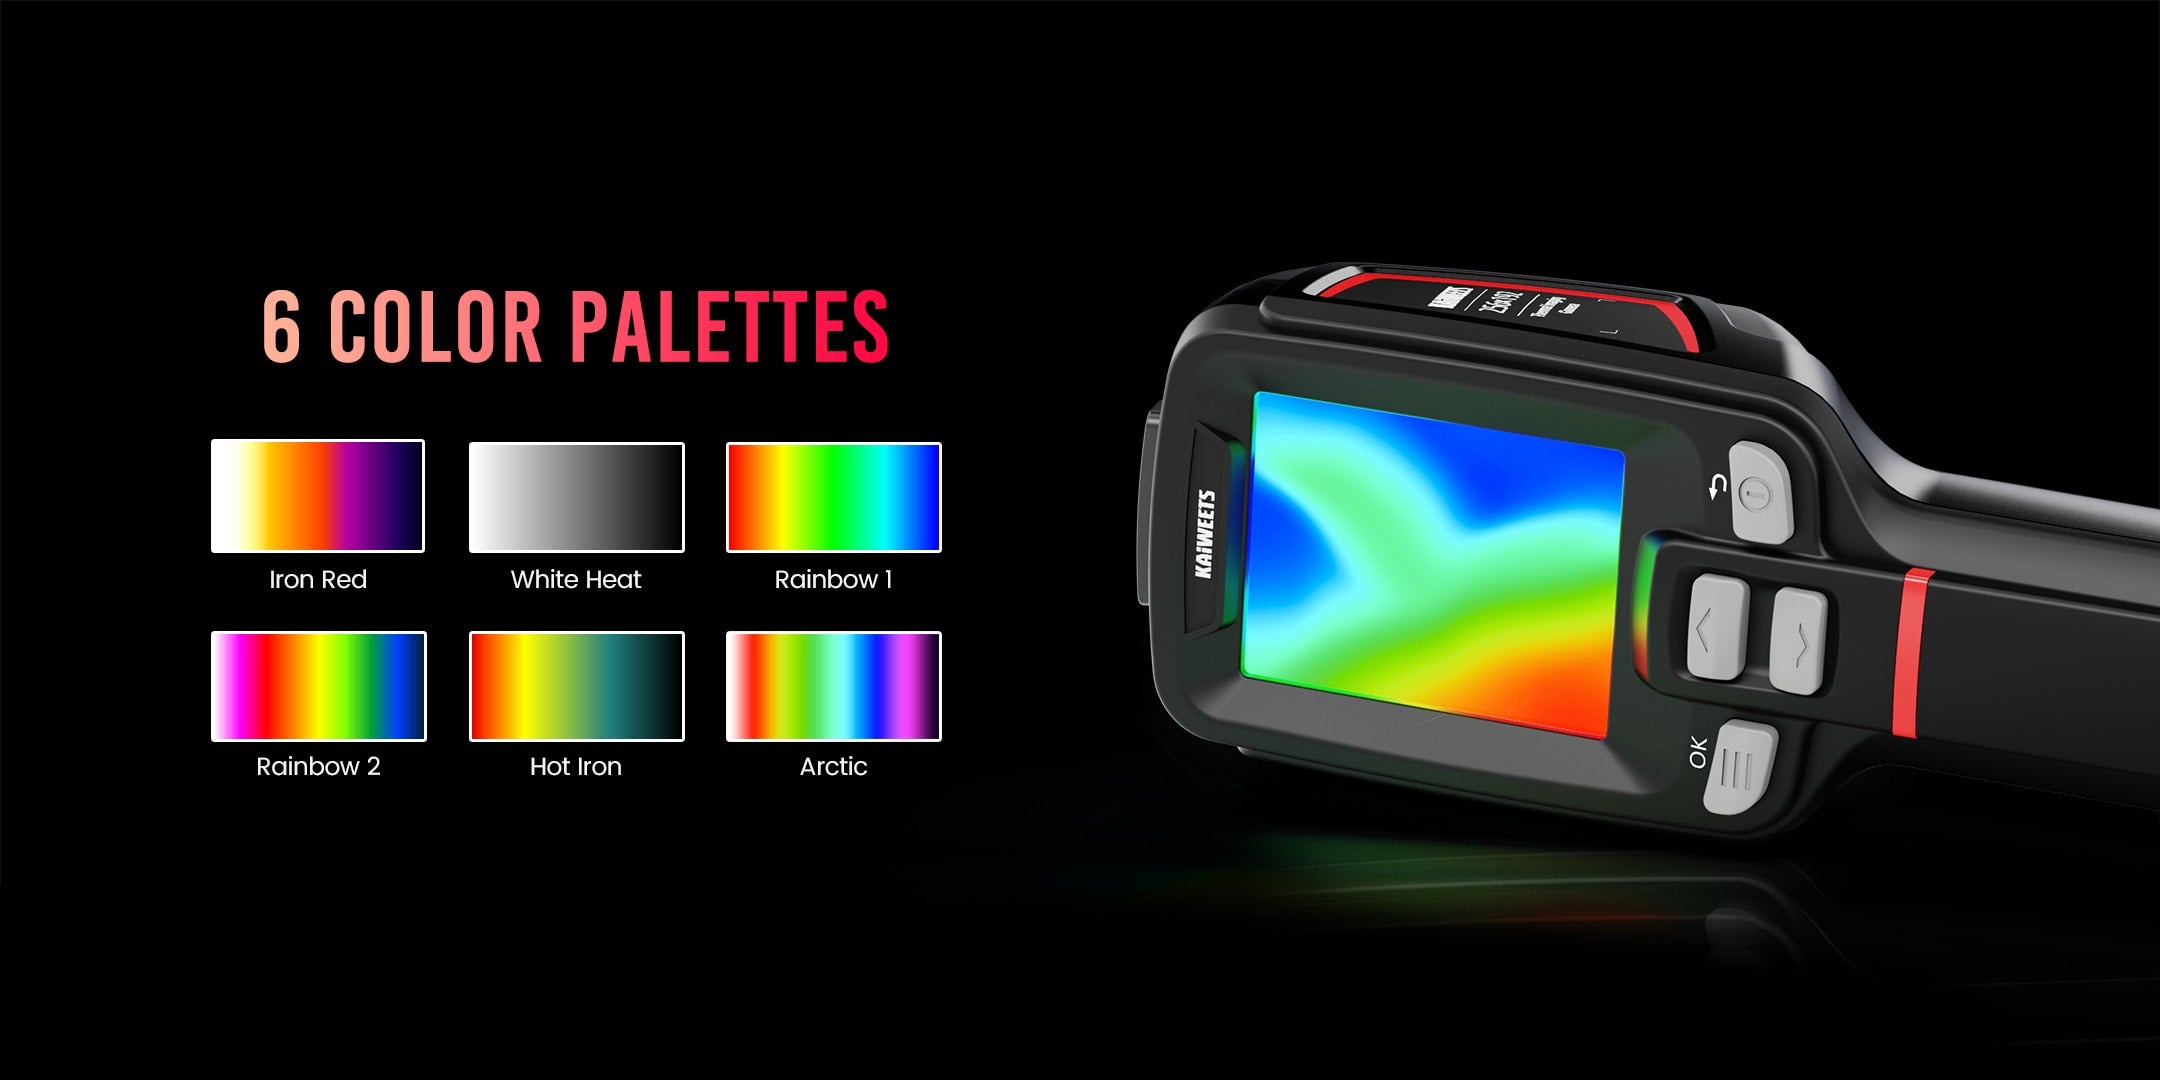 Kti-W02 handheld ir thermal camera multiple color palette options